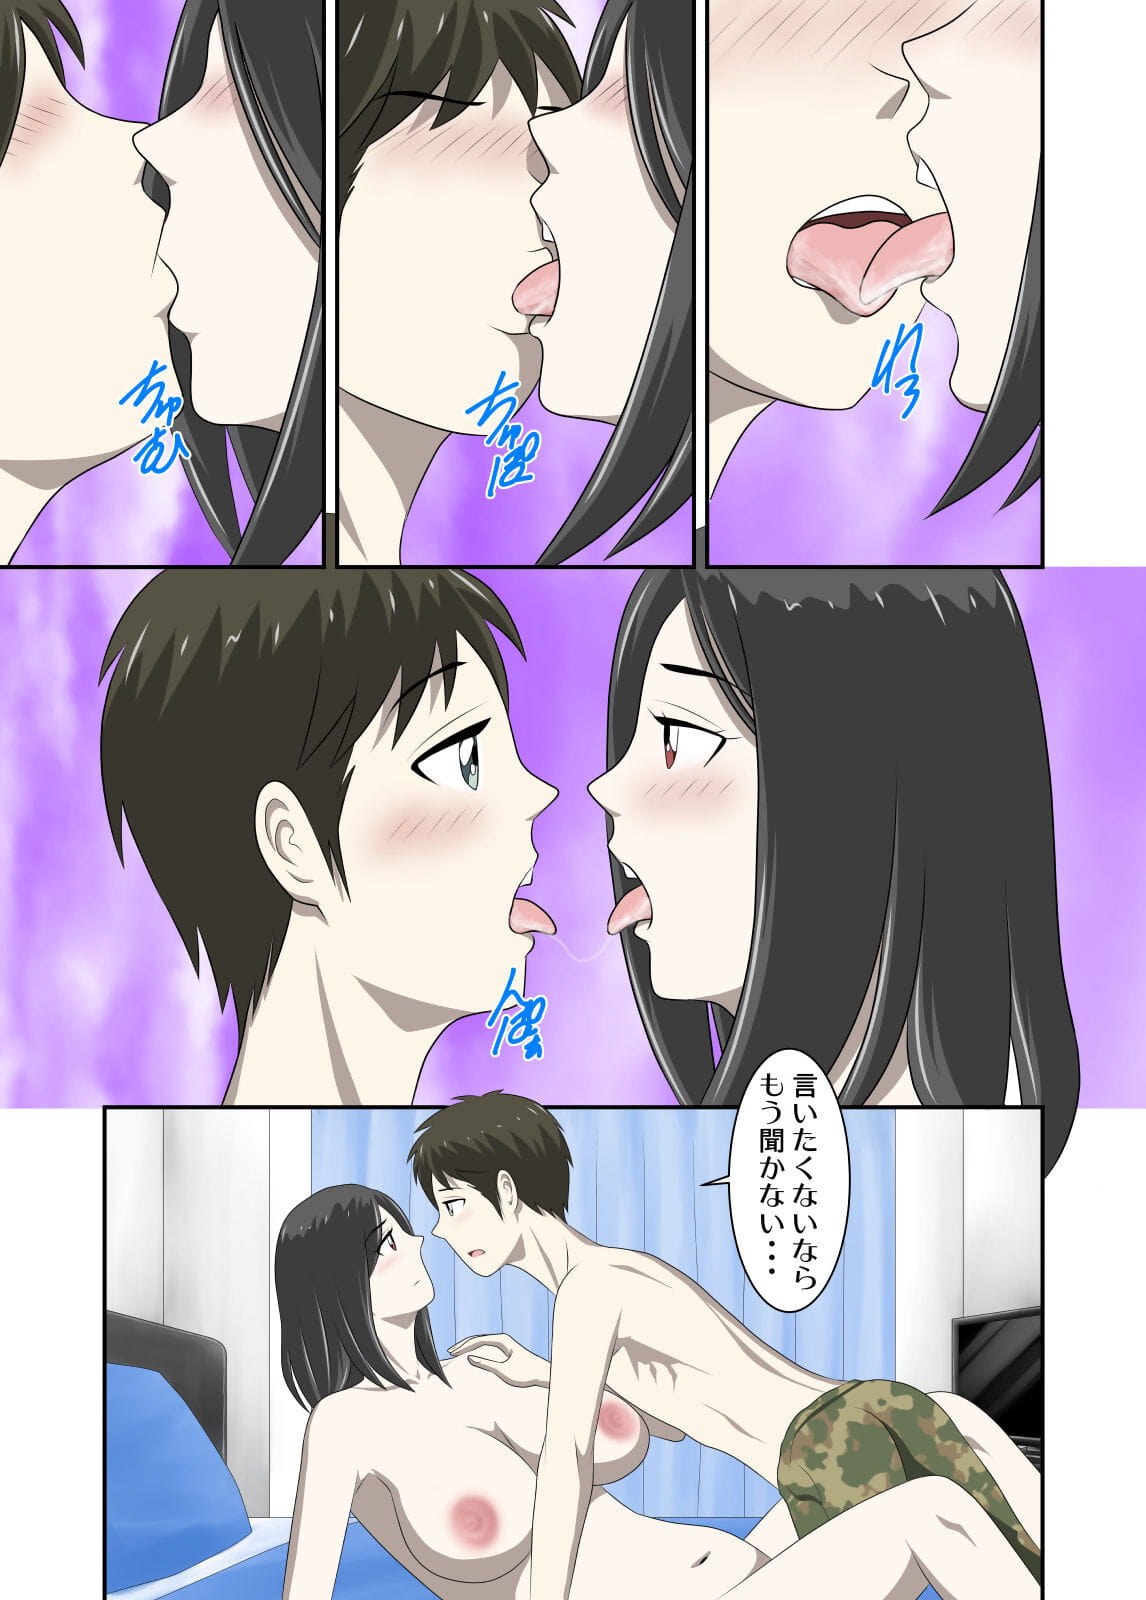 wxy كاريكاتير toaru jijou كارا الجنس سورو hame ني nari hontou ني هاميتشاتا toaru أوياكو لا ohanashi 5 جزء 3